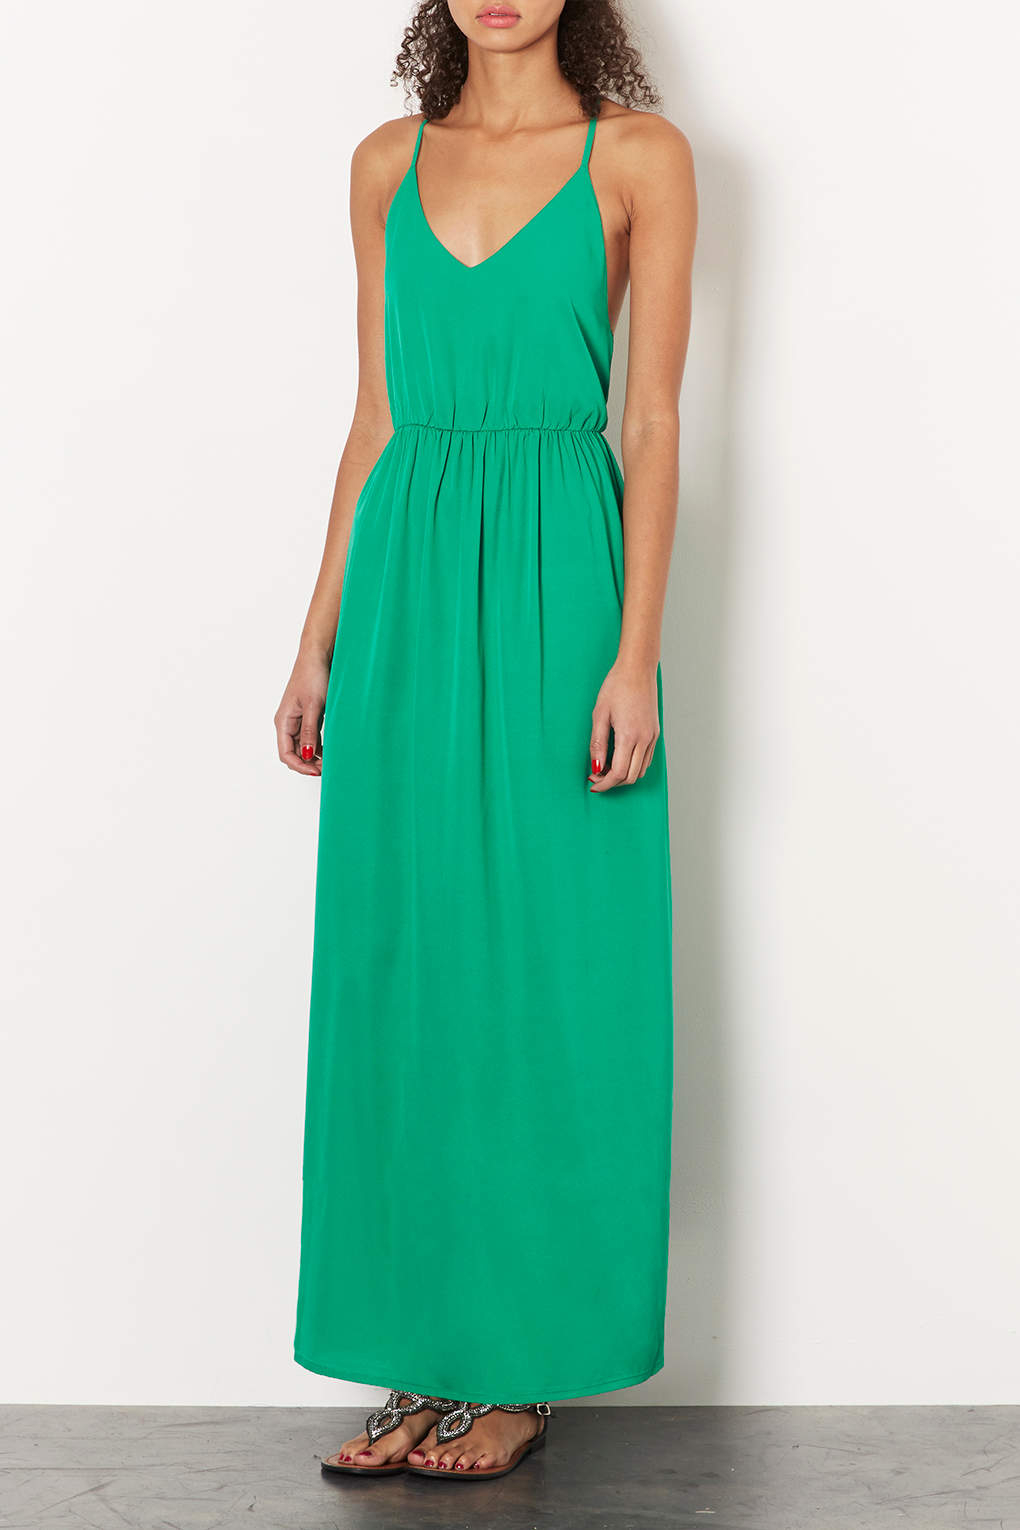 Lyst - Topshop Jewel Green Beaded Back Maxi Dress in Green